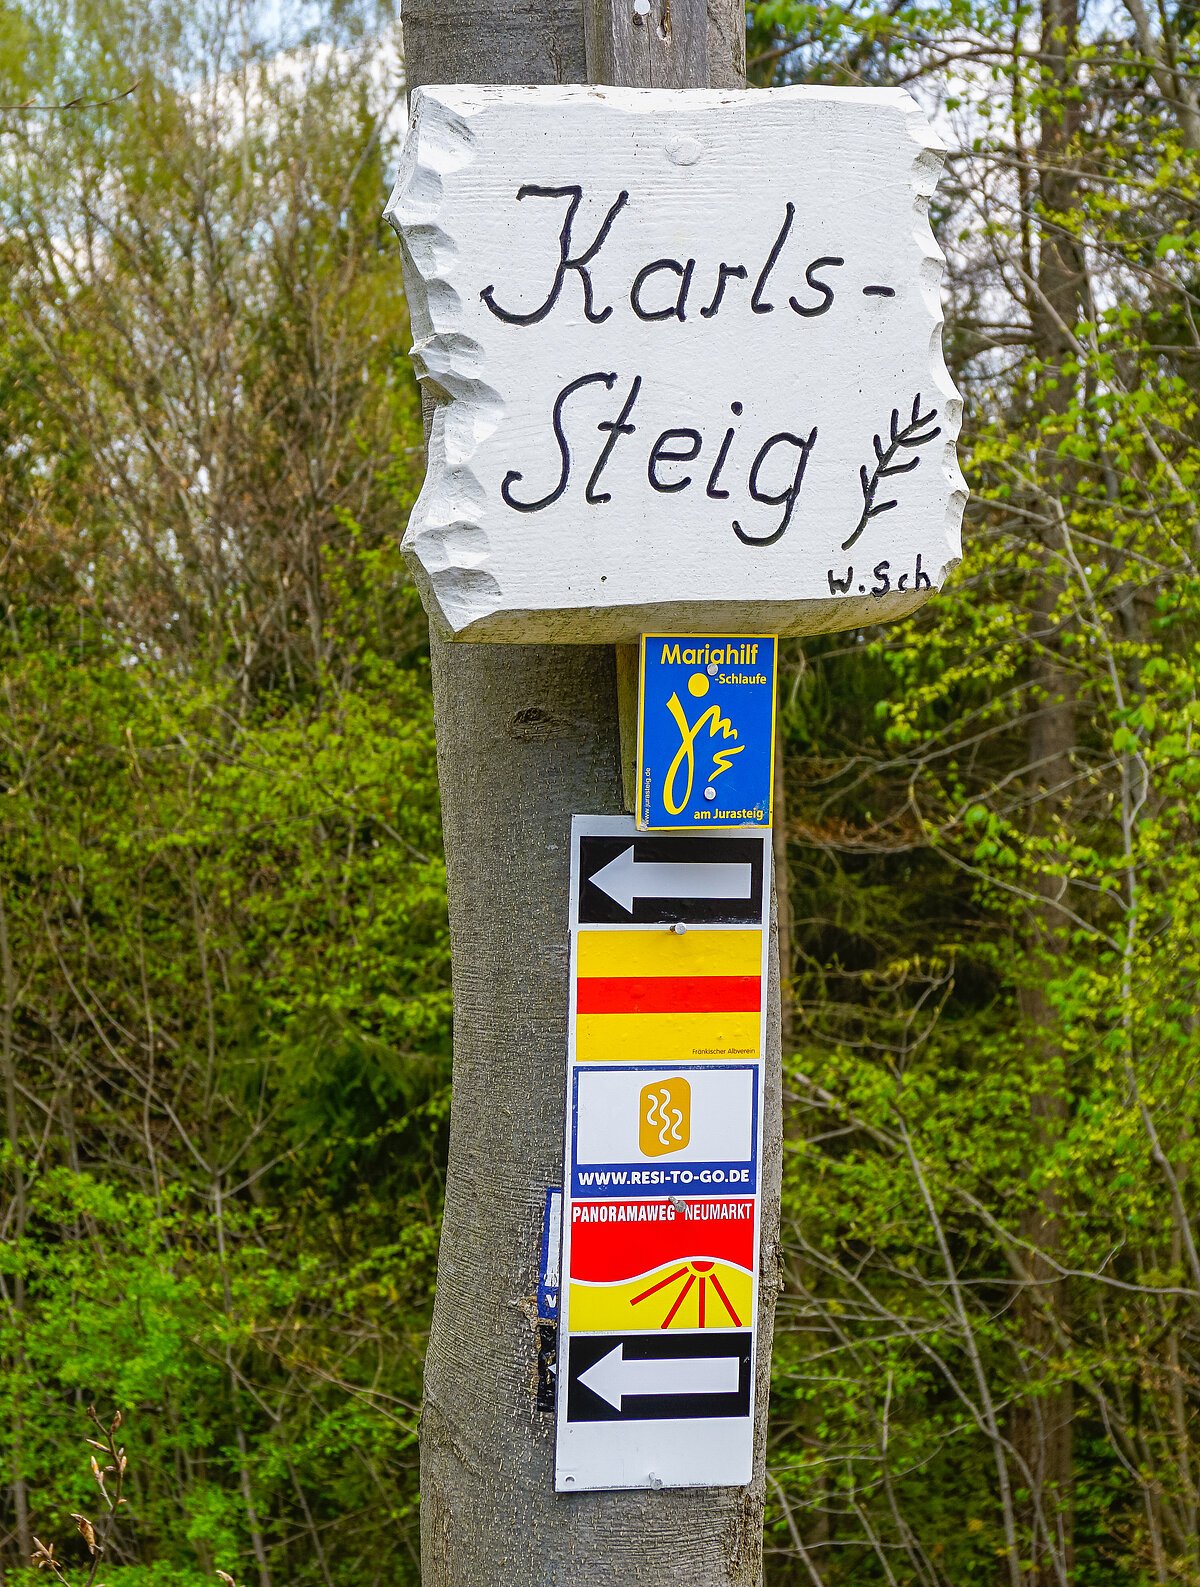 Panoramaweg Neumarkt - Karls-Steig